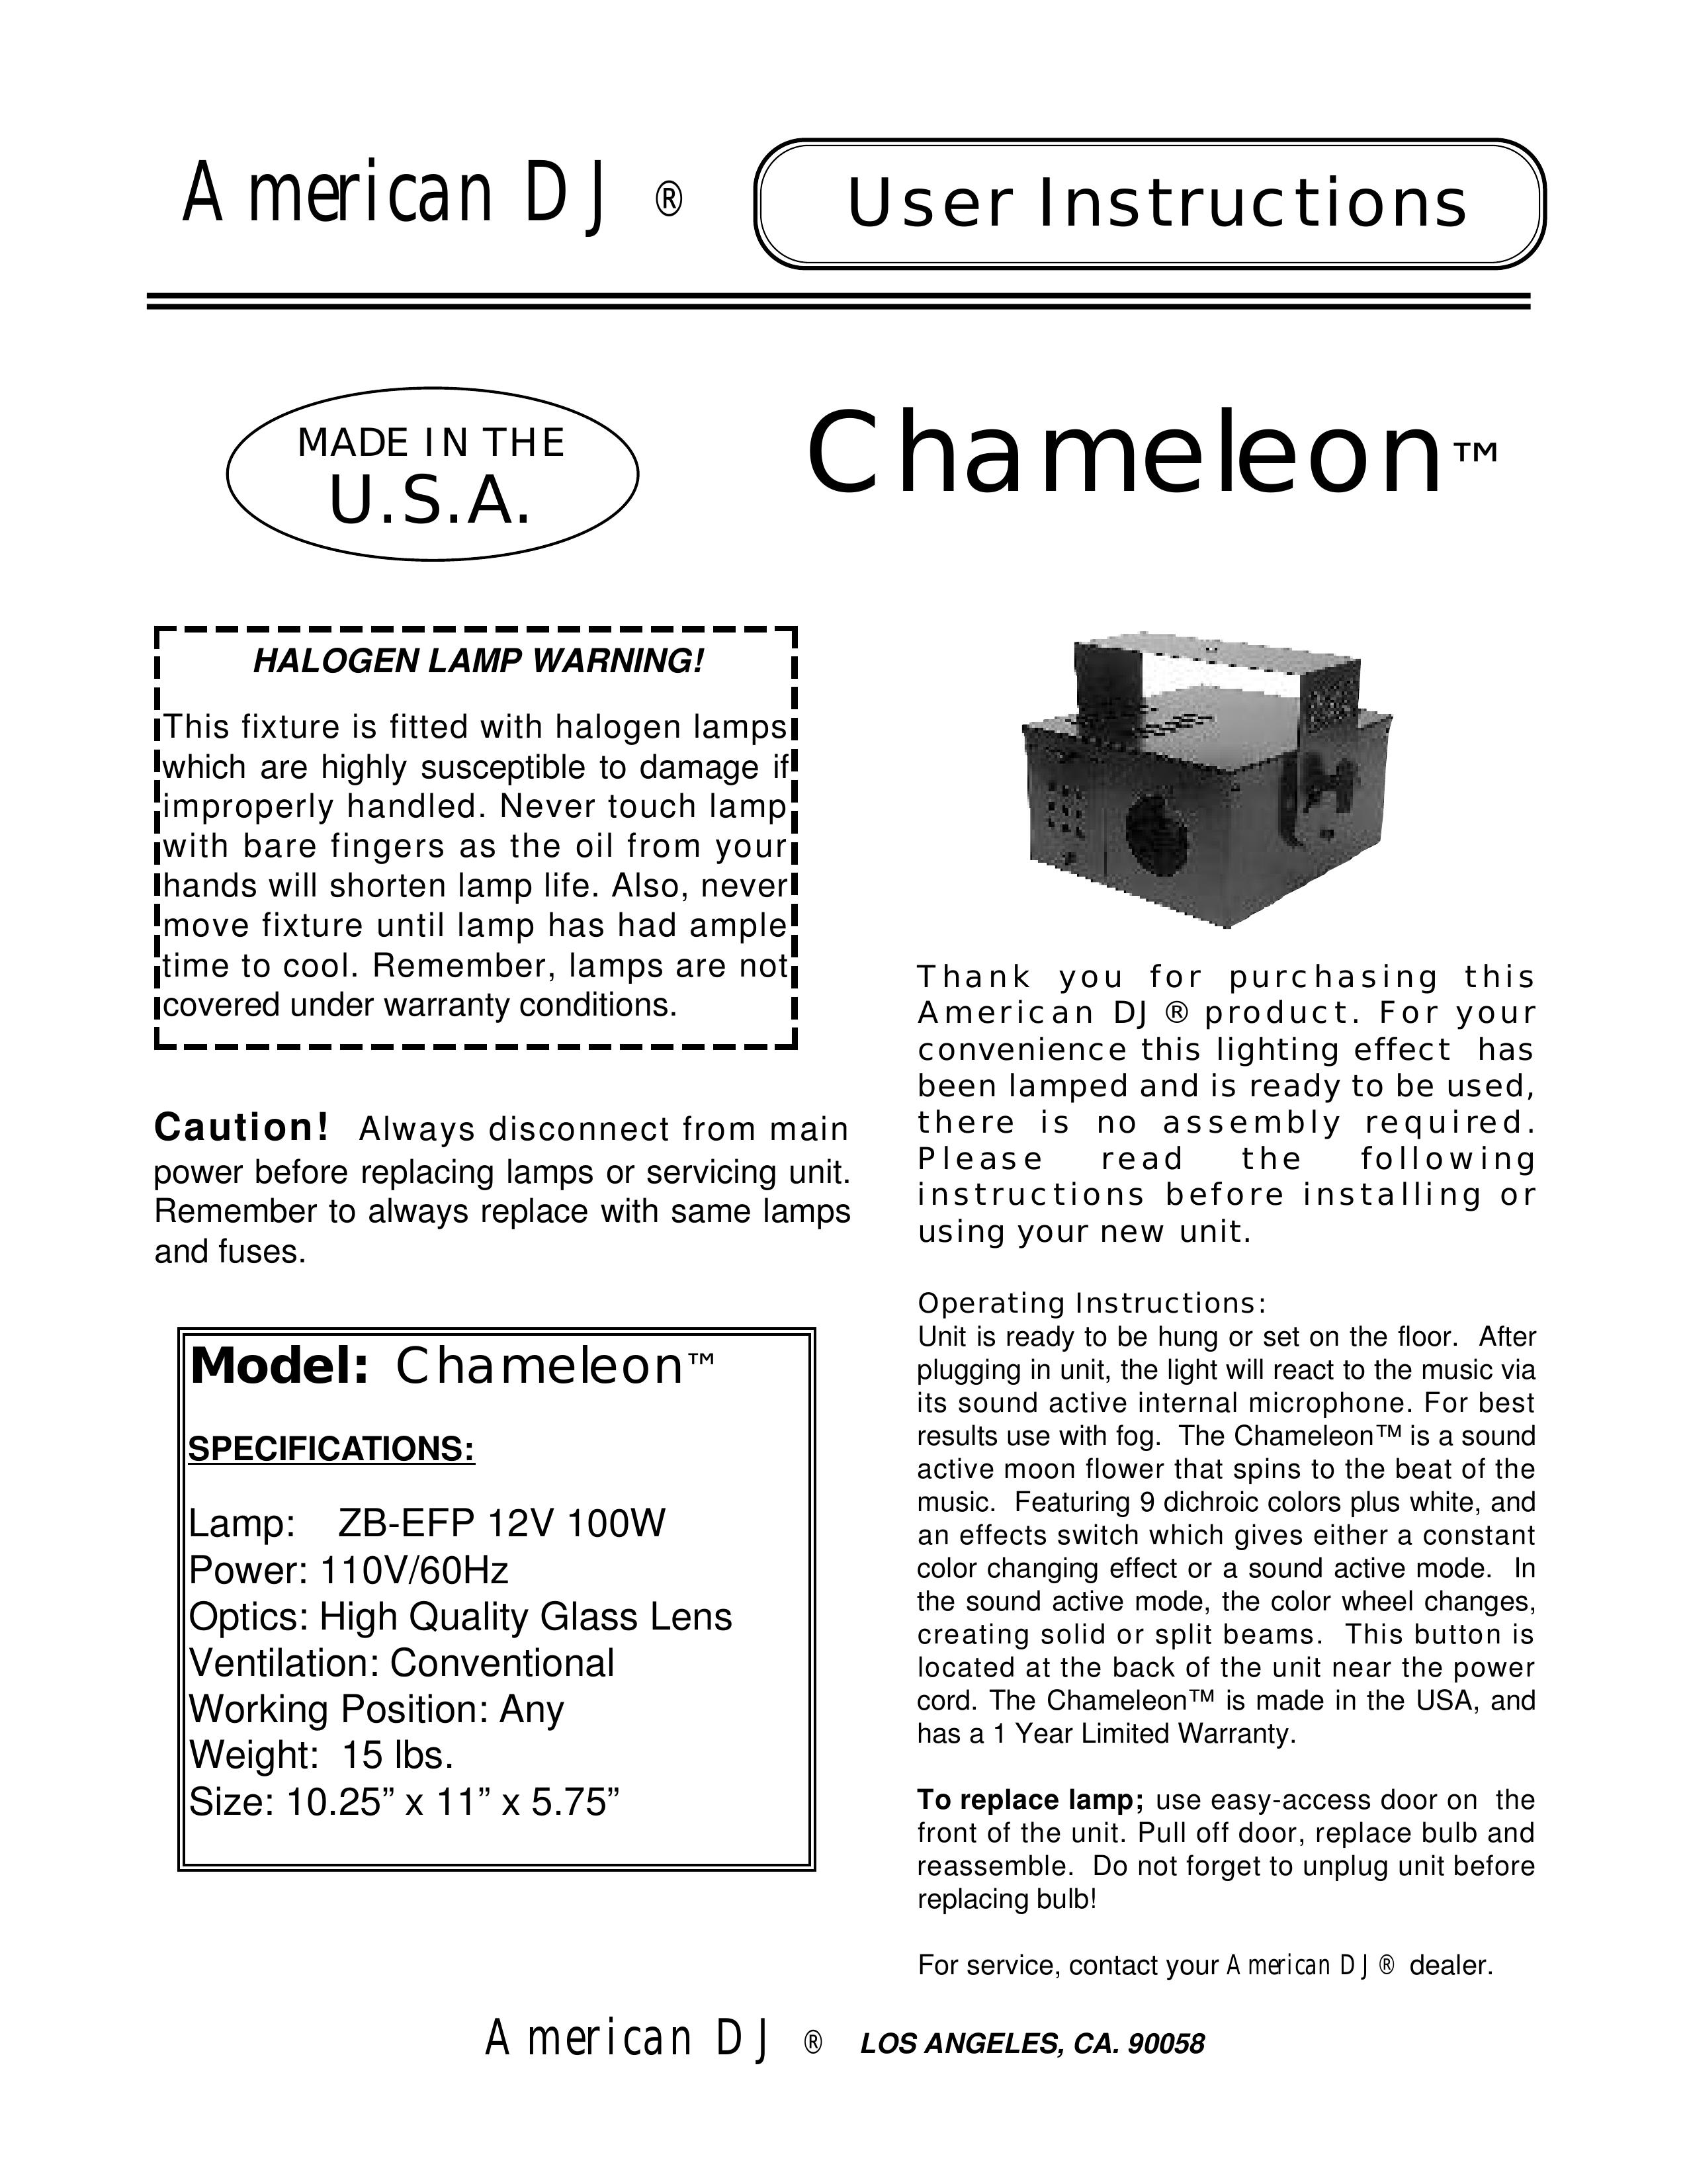 American DJ Chameleon DJ Equipment User Manual (Page 1)